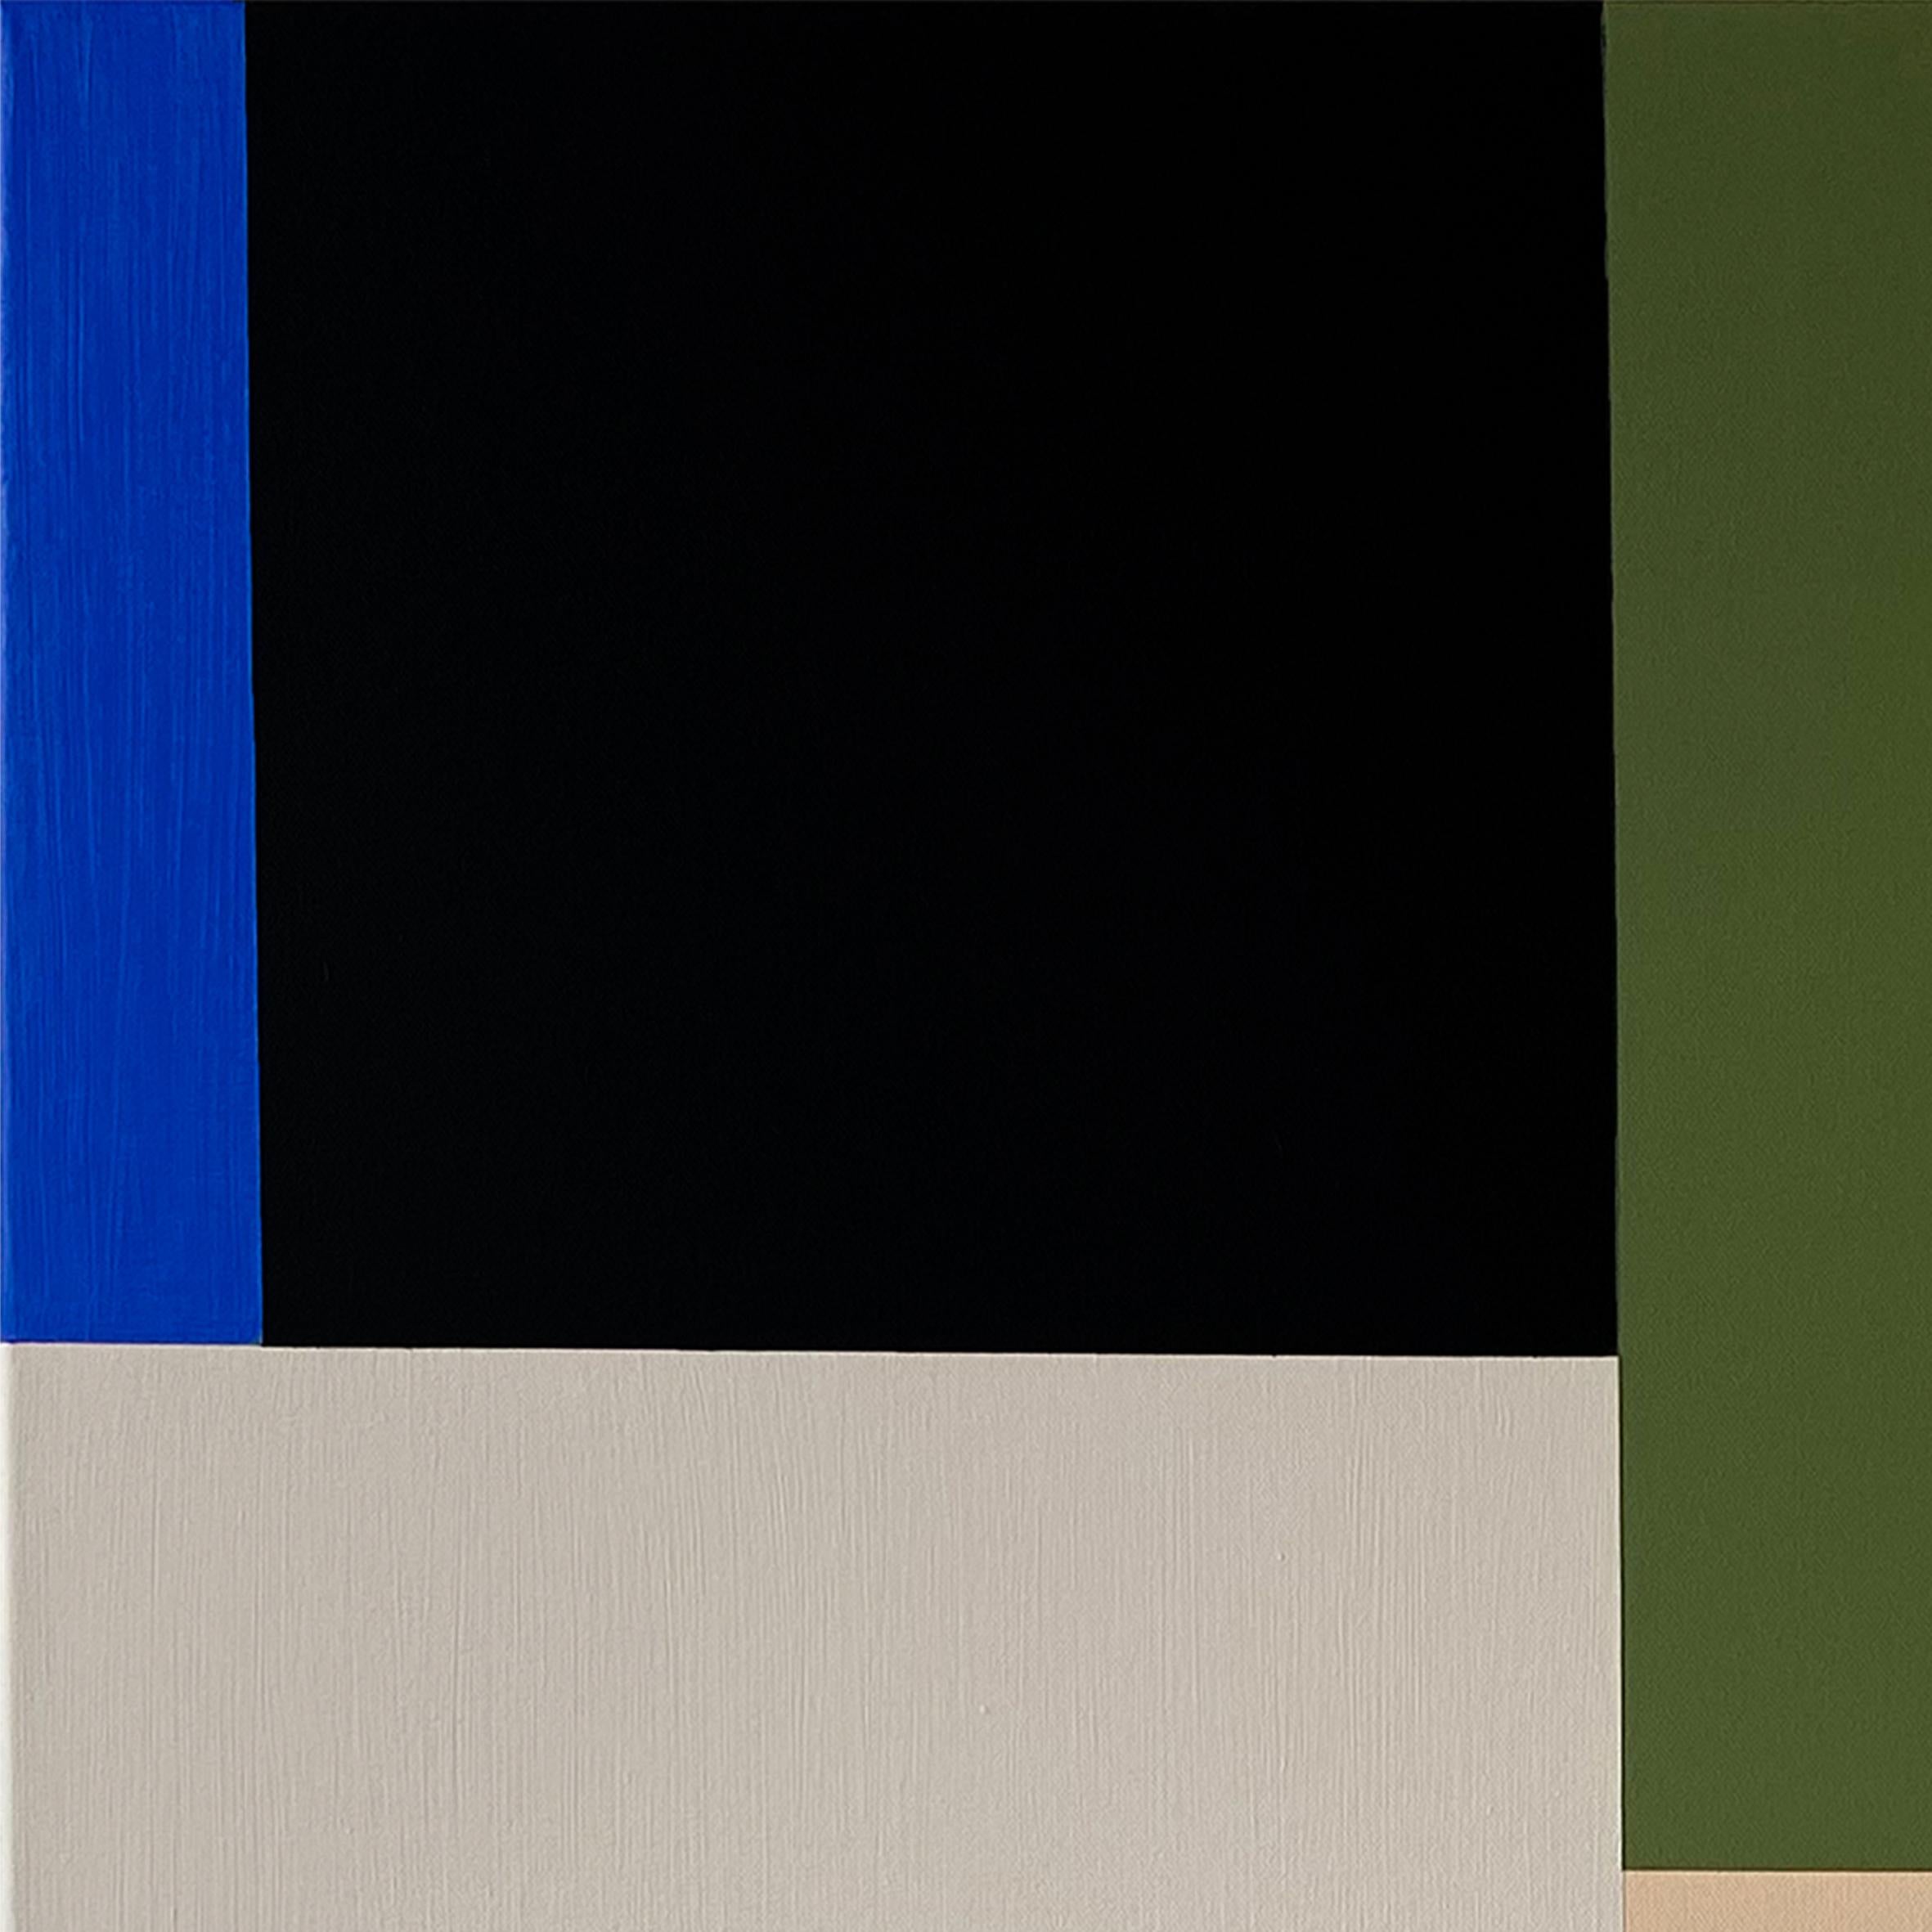 Britannique Contemporary Abstract Green Blue Colour Block Acrylic Painting Palm Springs (peinture acrylique contemporaine) en vente